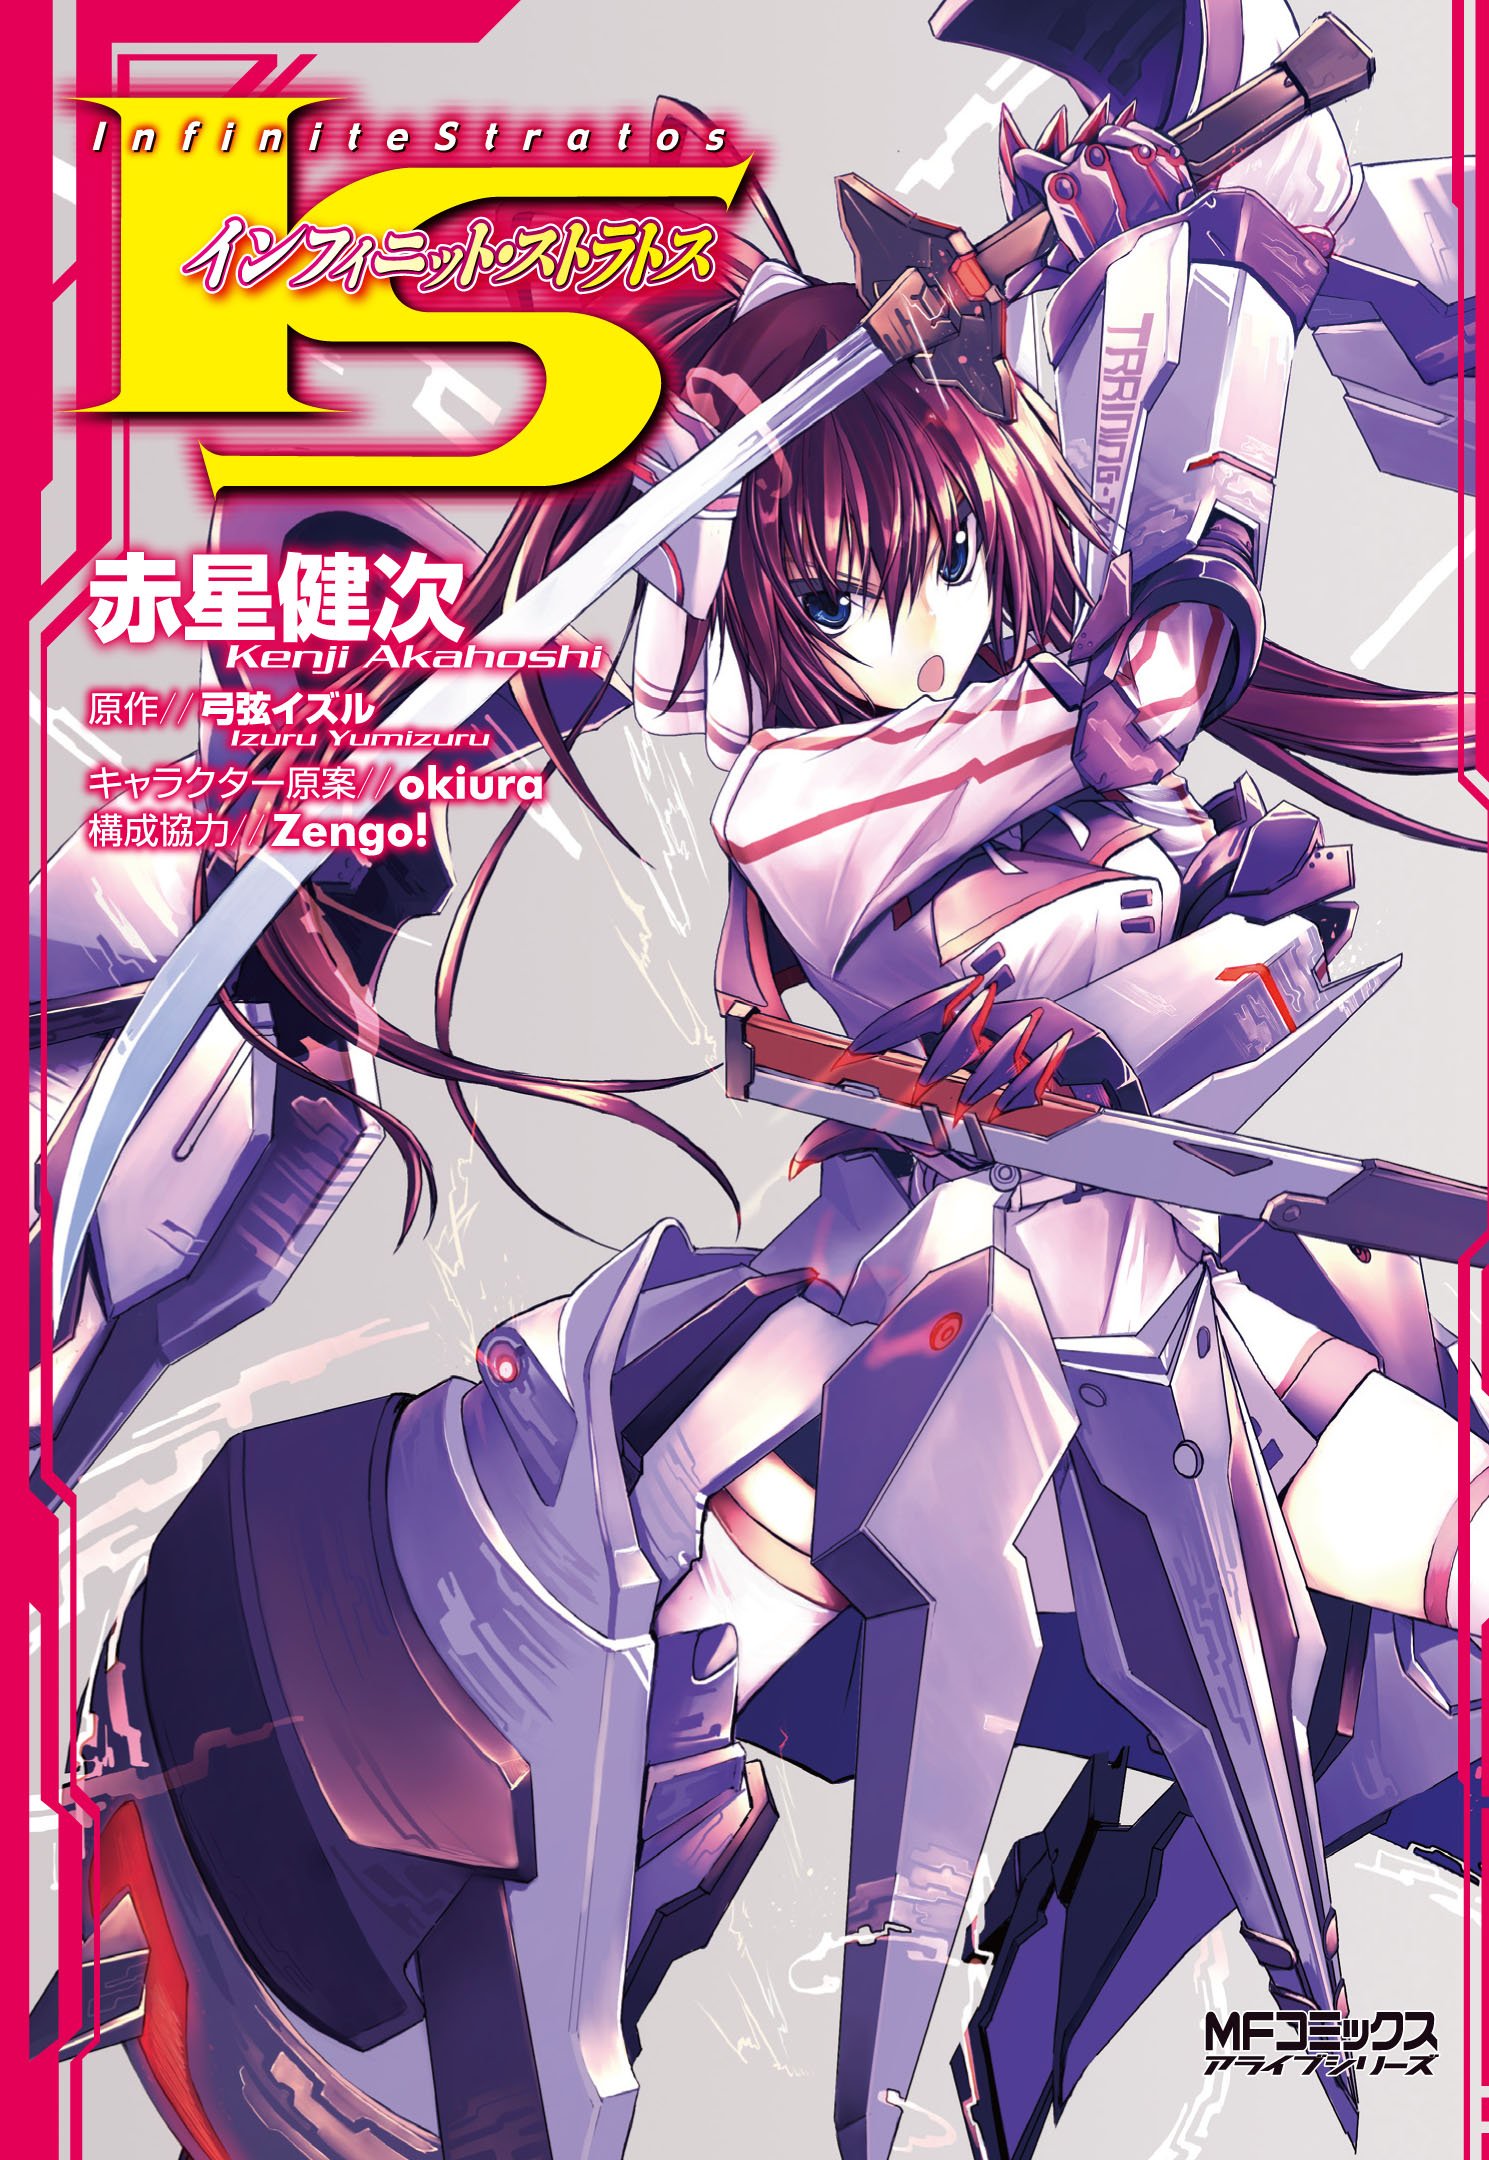 Infinite Stratos (series)/Manga | Infinite Stratos Wiki ...